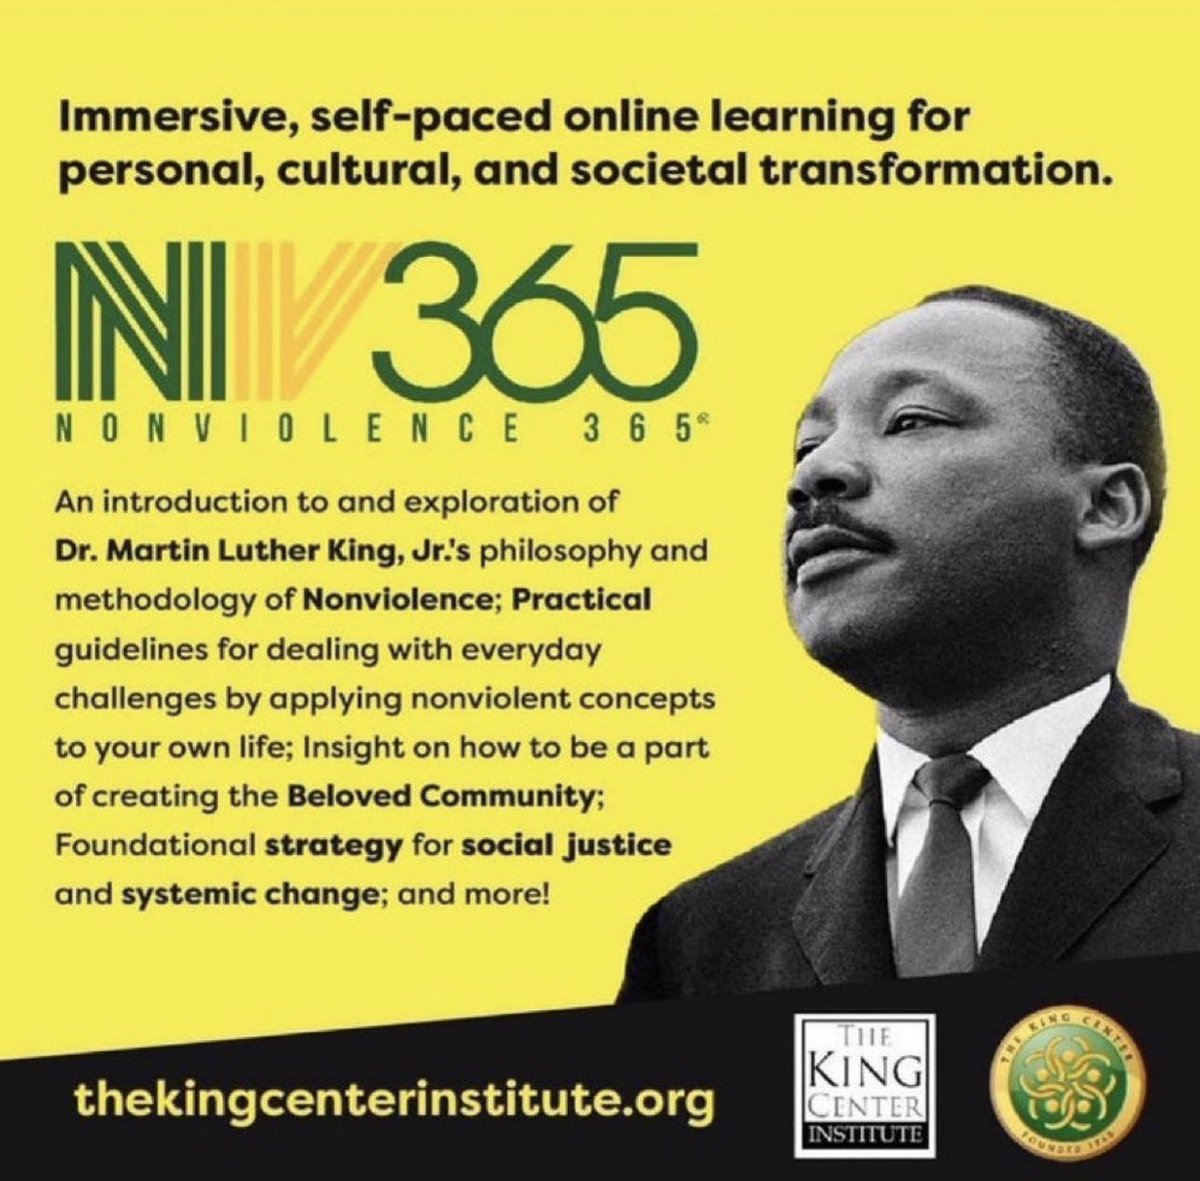 Study #nonviolence with @TheKingCenter: 

thekingcenterinstitute.org

#Nonviolence365 #NV365 #MLK